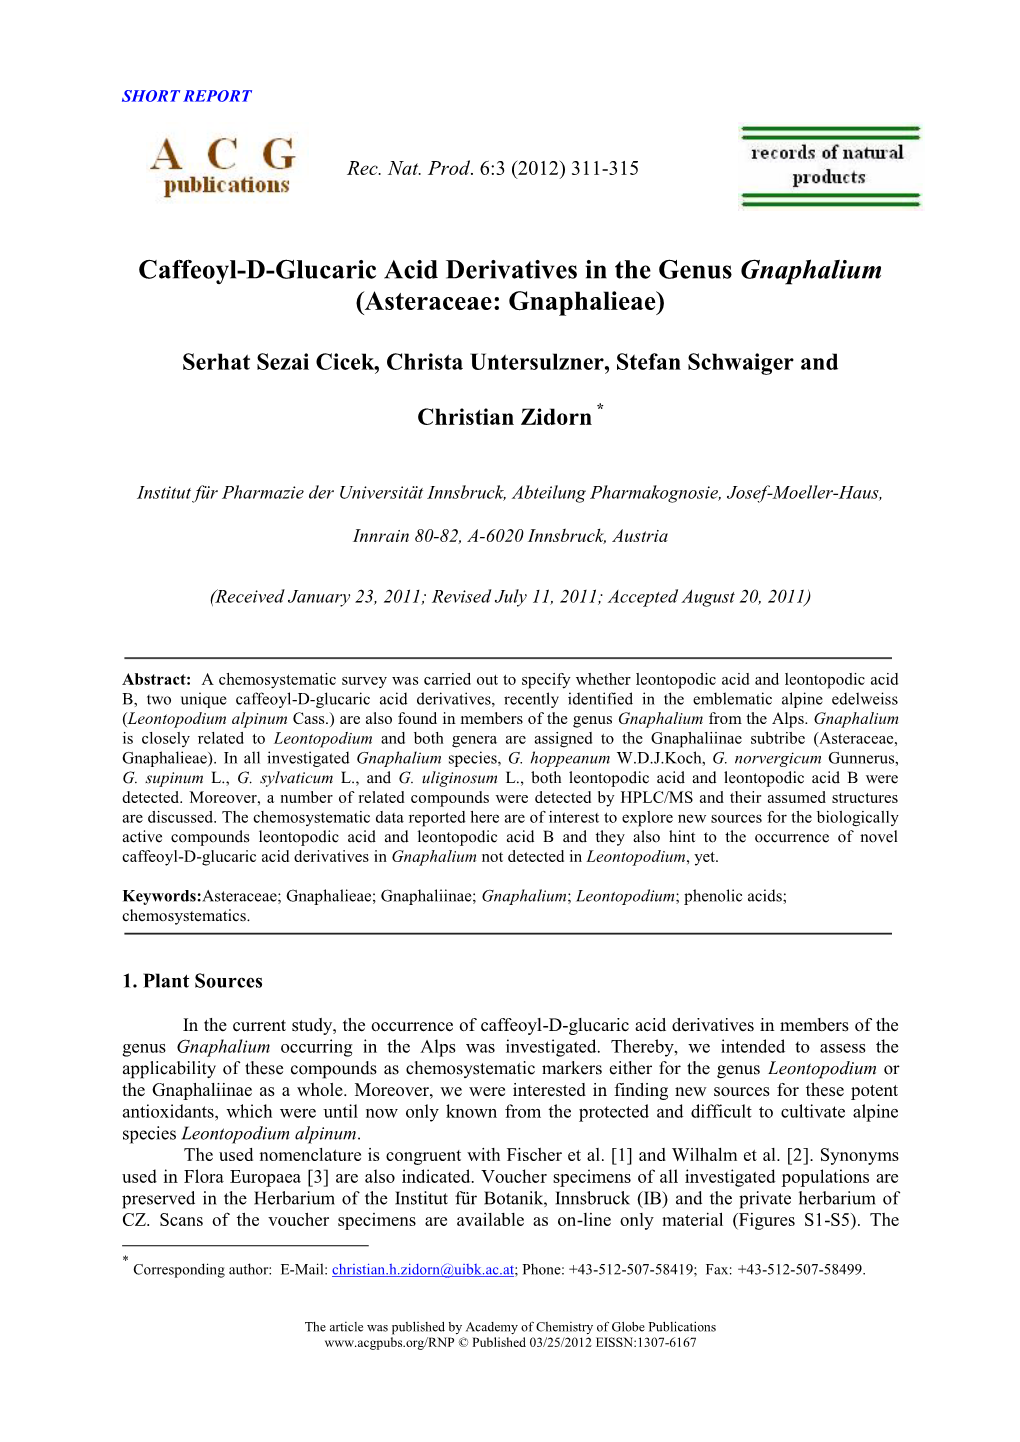 Caffeoyl-D-Glucaric Acid Derivatives in the Genus Gnaphalium (Asteraceae: Gnaphalieae)